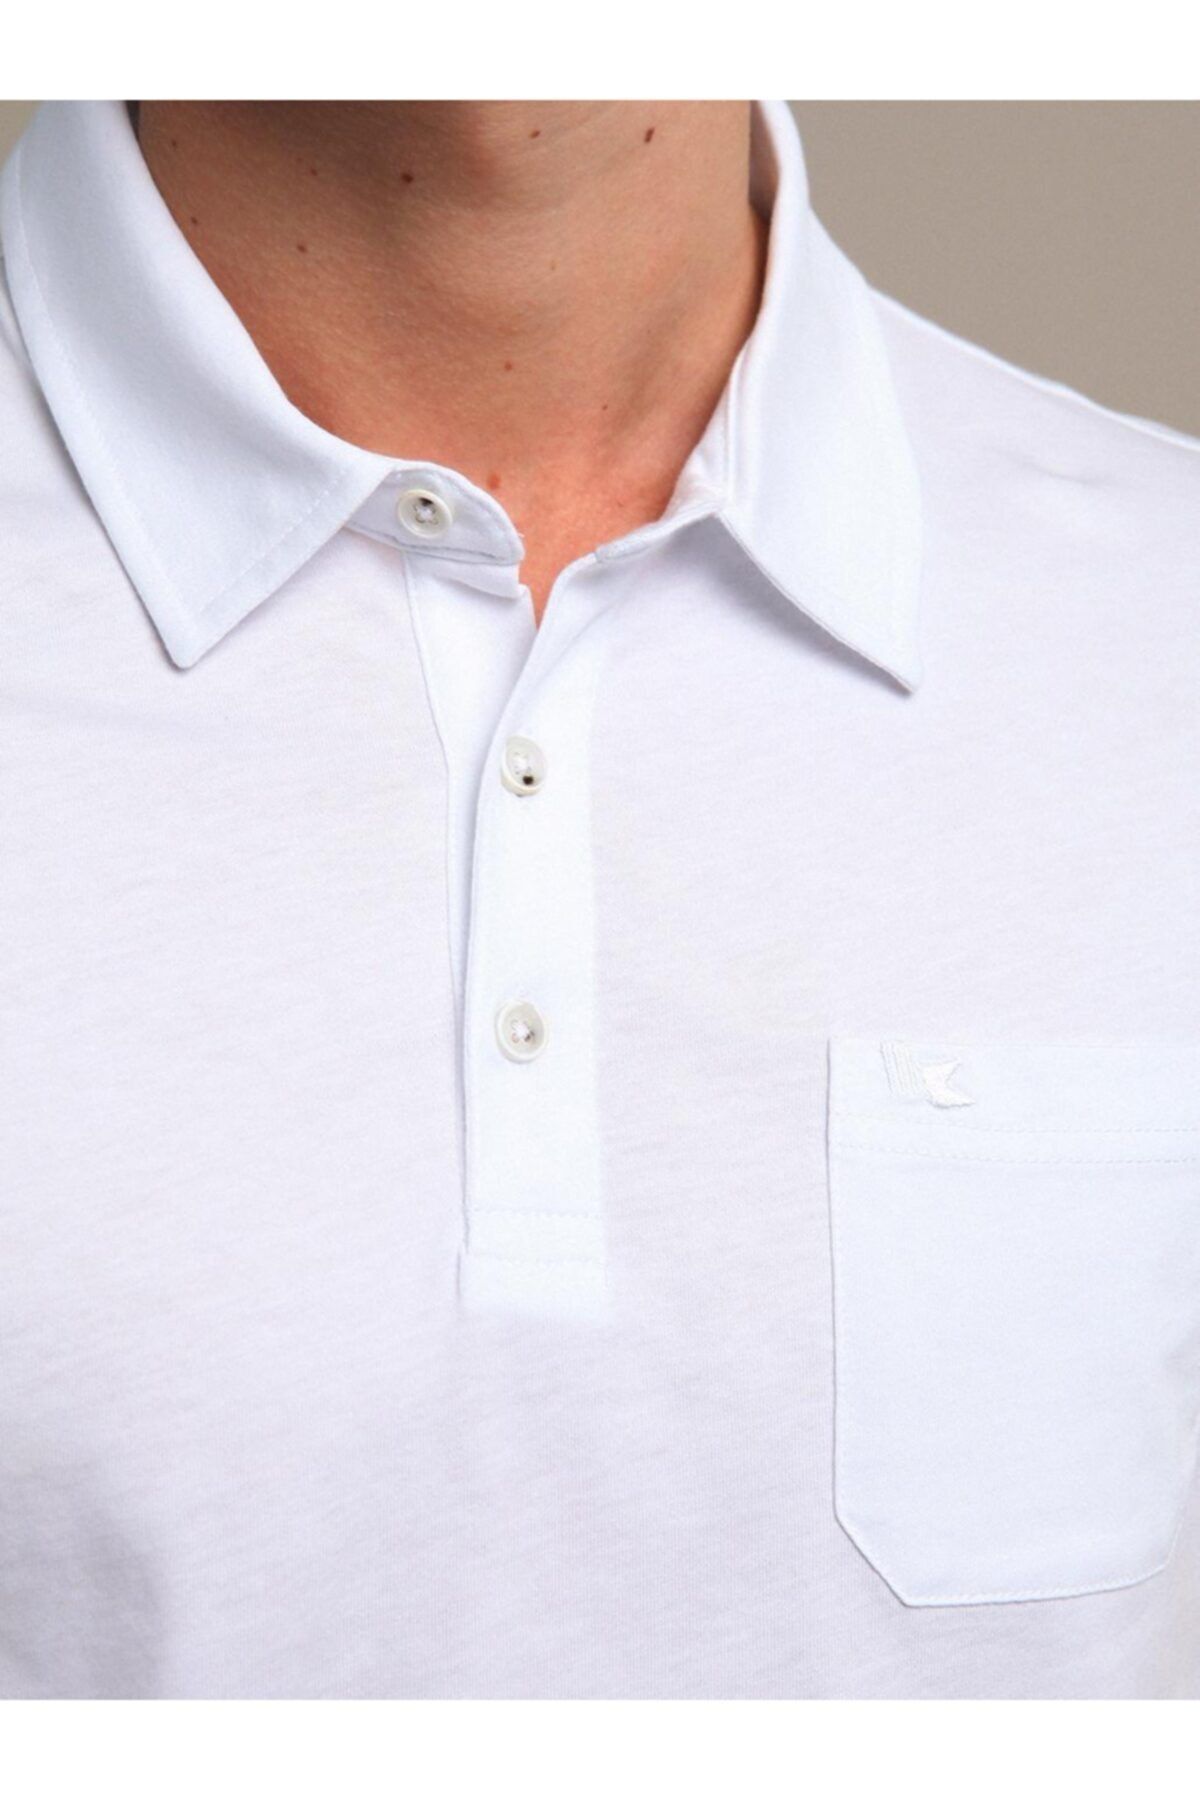 Kip Beyaz Düz Polo Yaka %100 Pamuk T-shirt